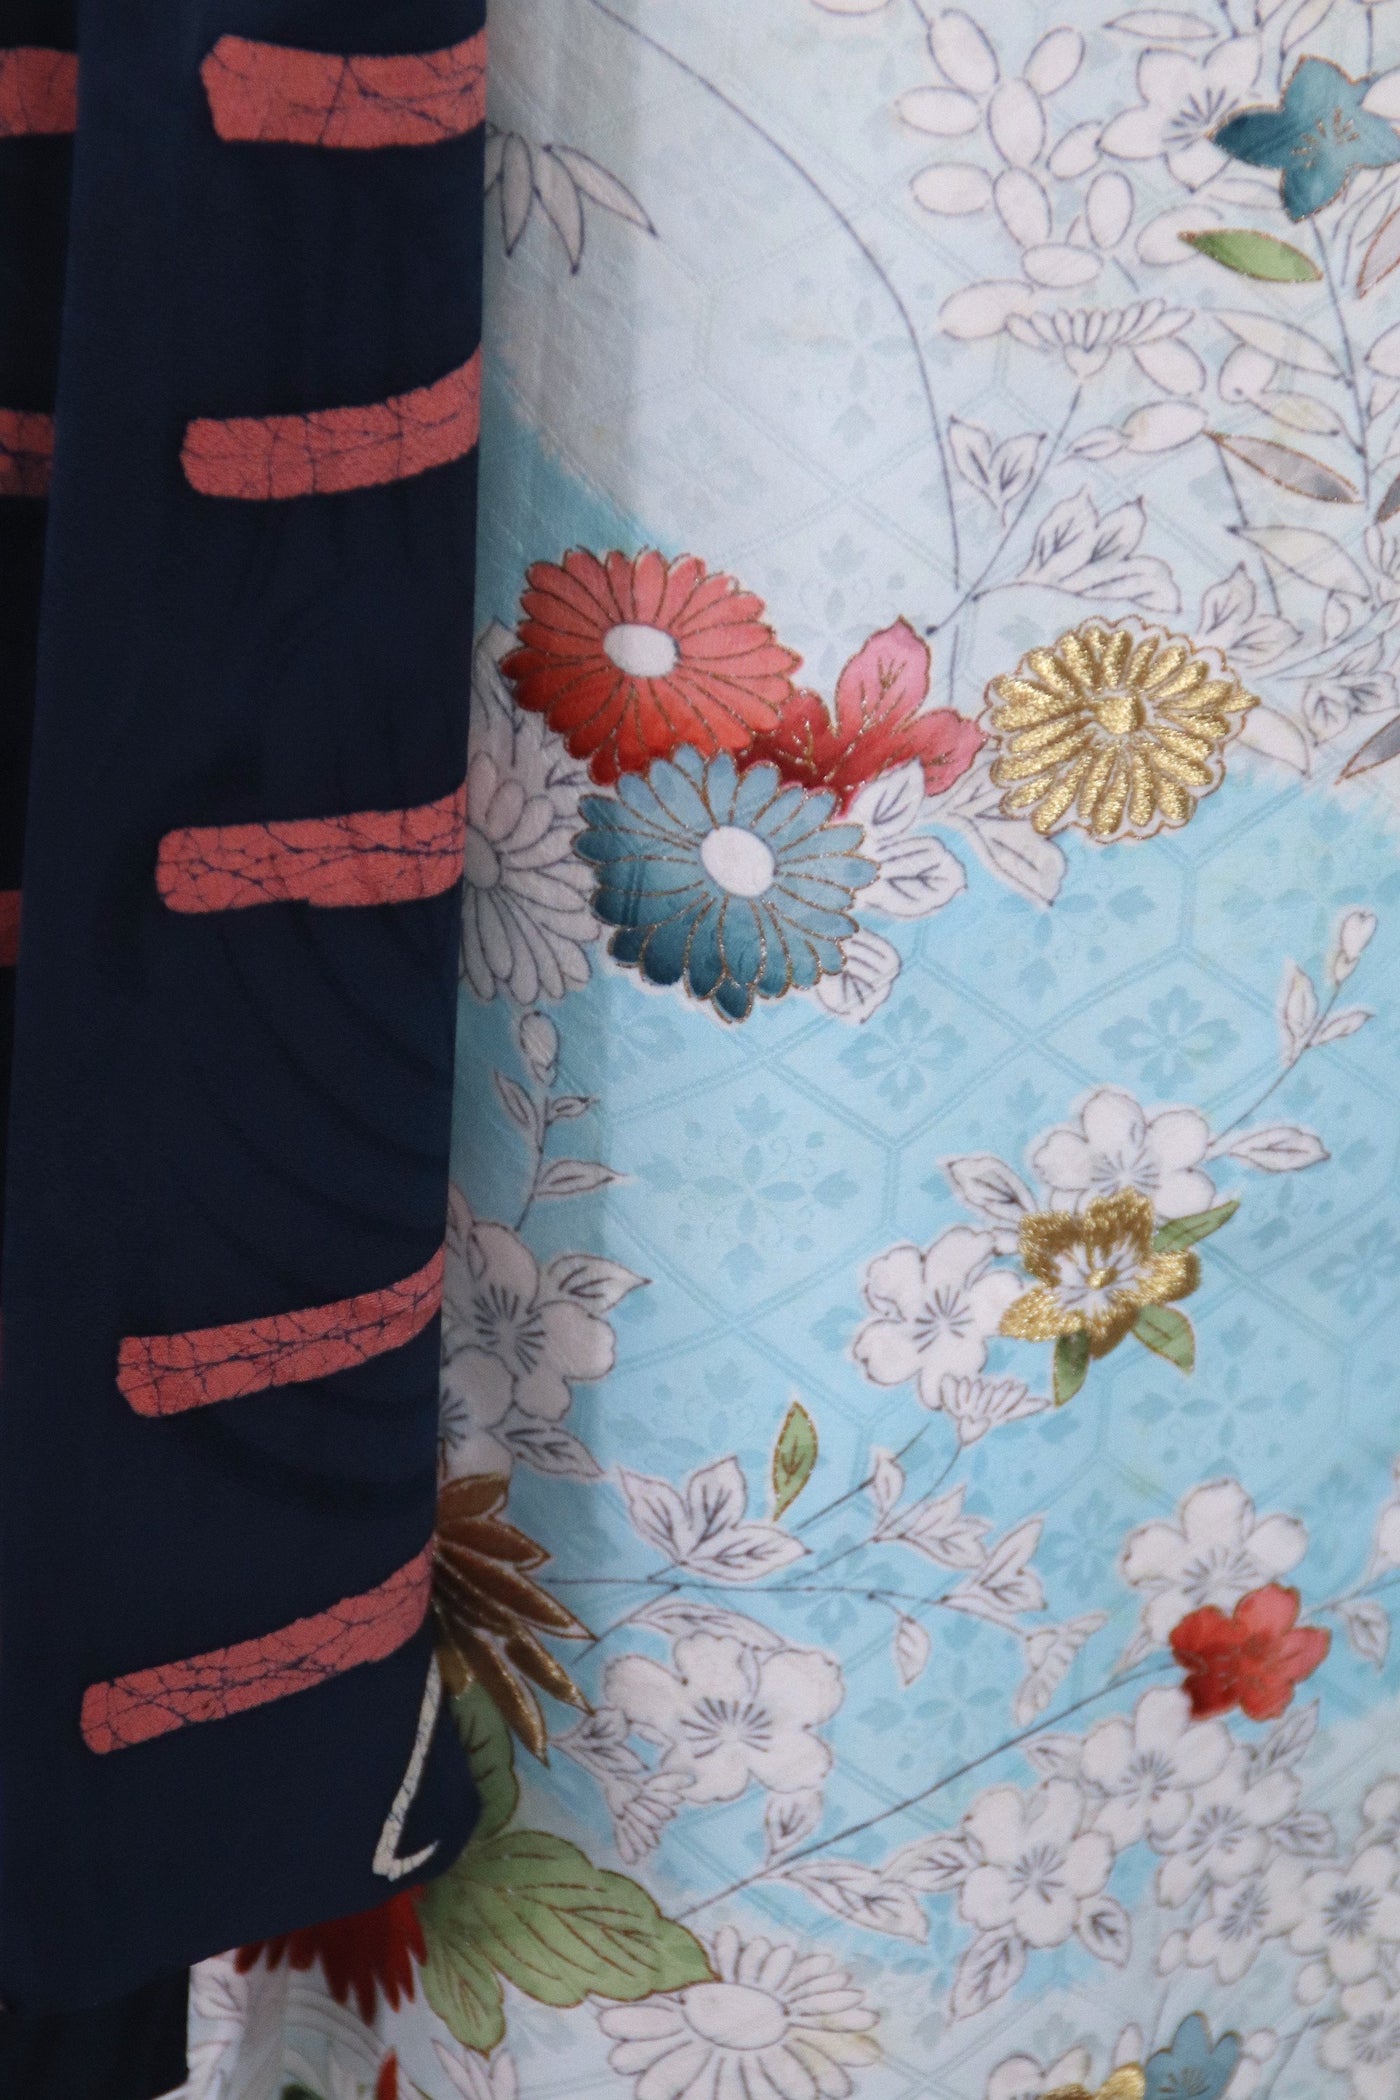 1970s Vintage Kimono Robe / Sky Blue Ombre Floral Print - ThisBlueBird